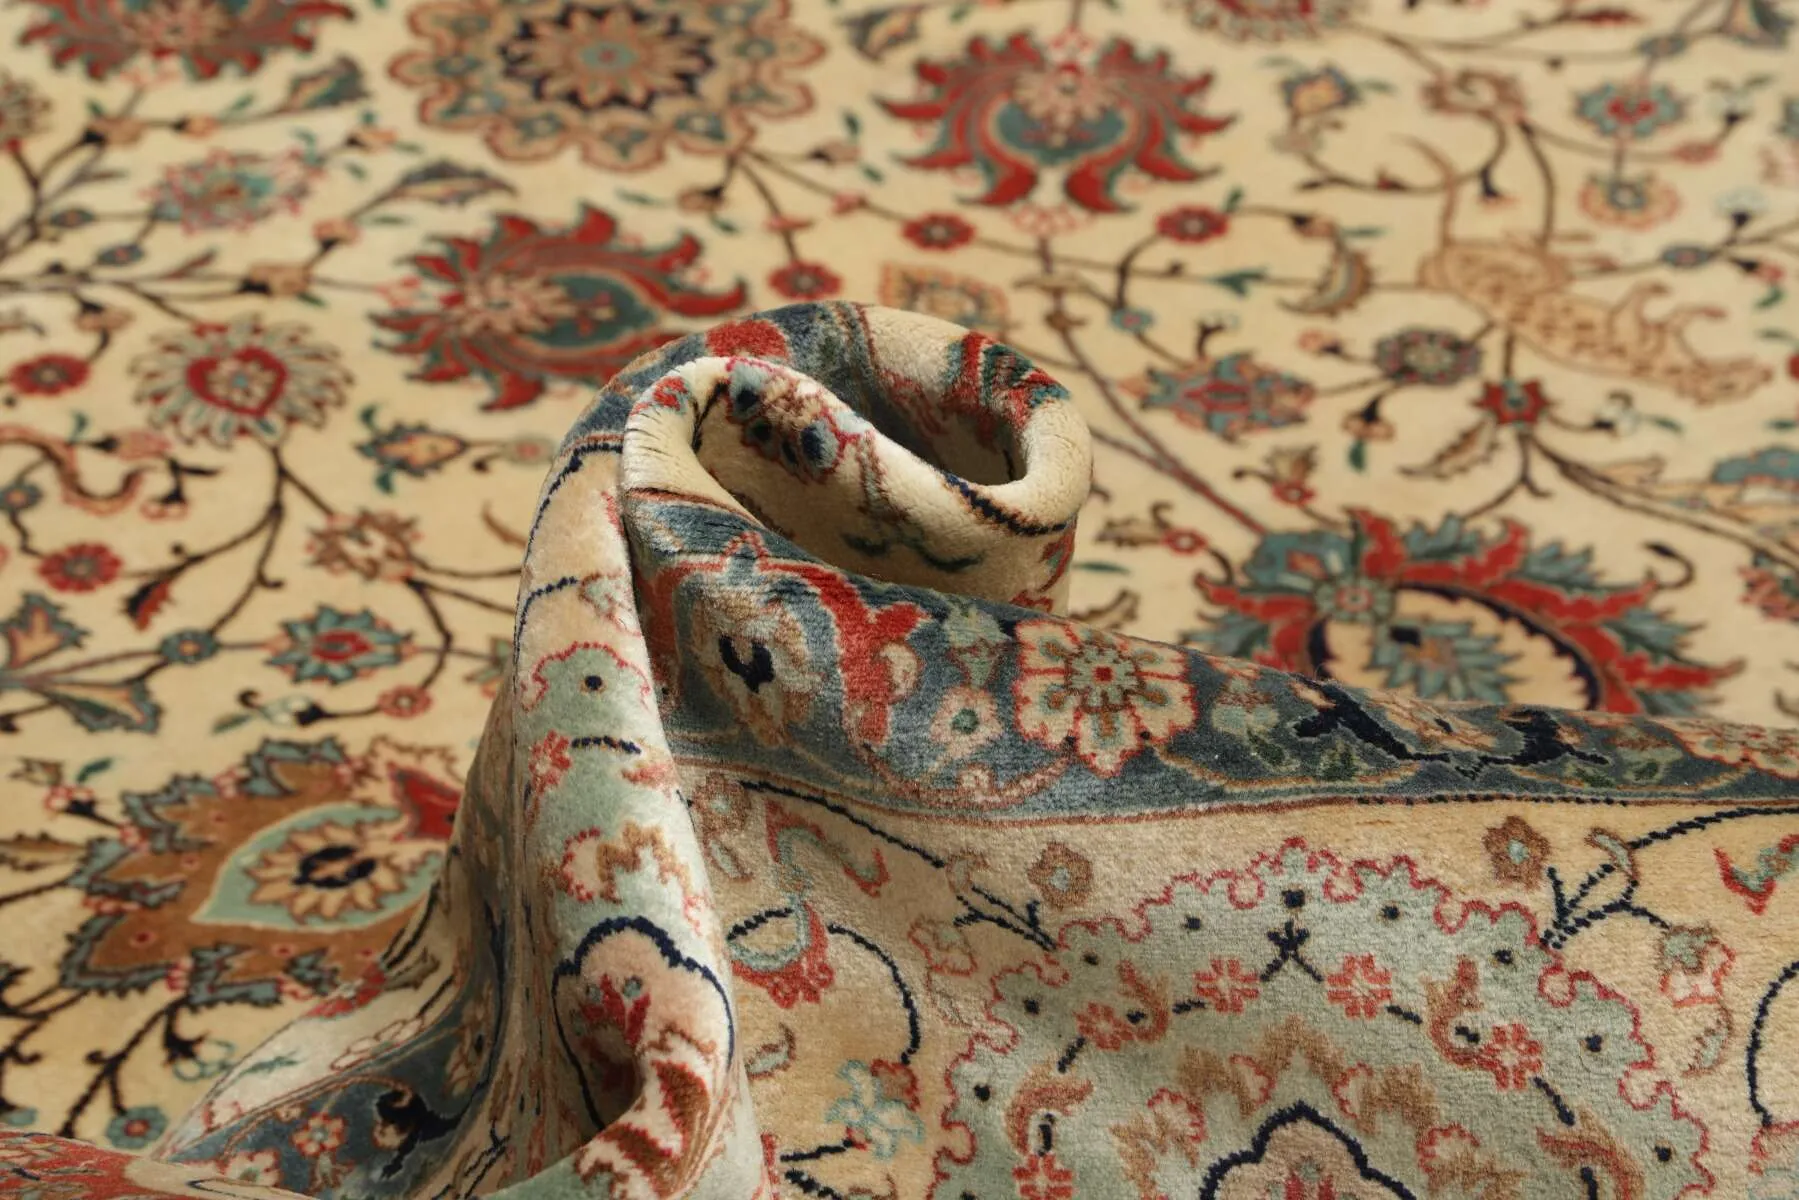 Teppich Täbriz 50Raj 302 x 403 cm Persien Alt Antik